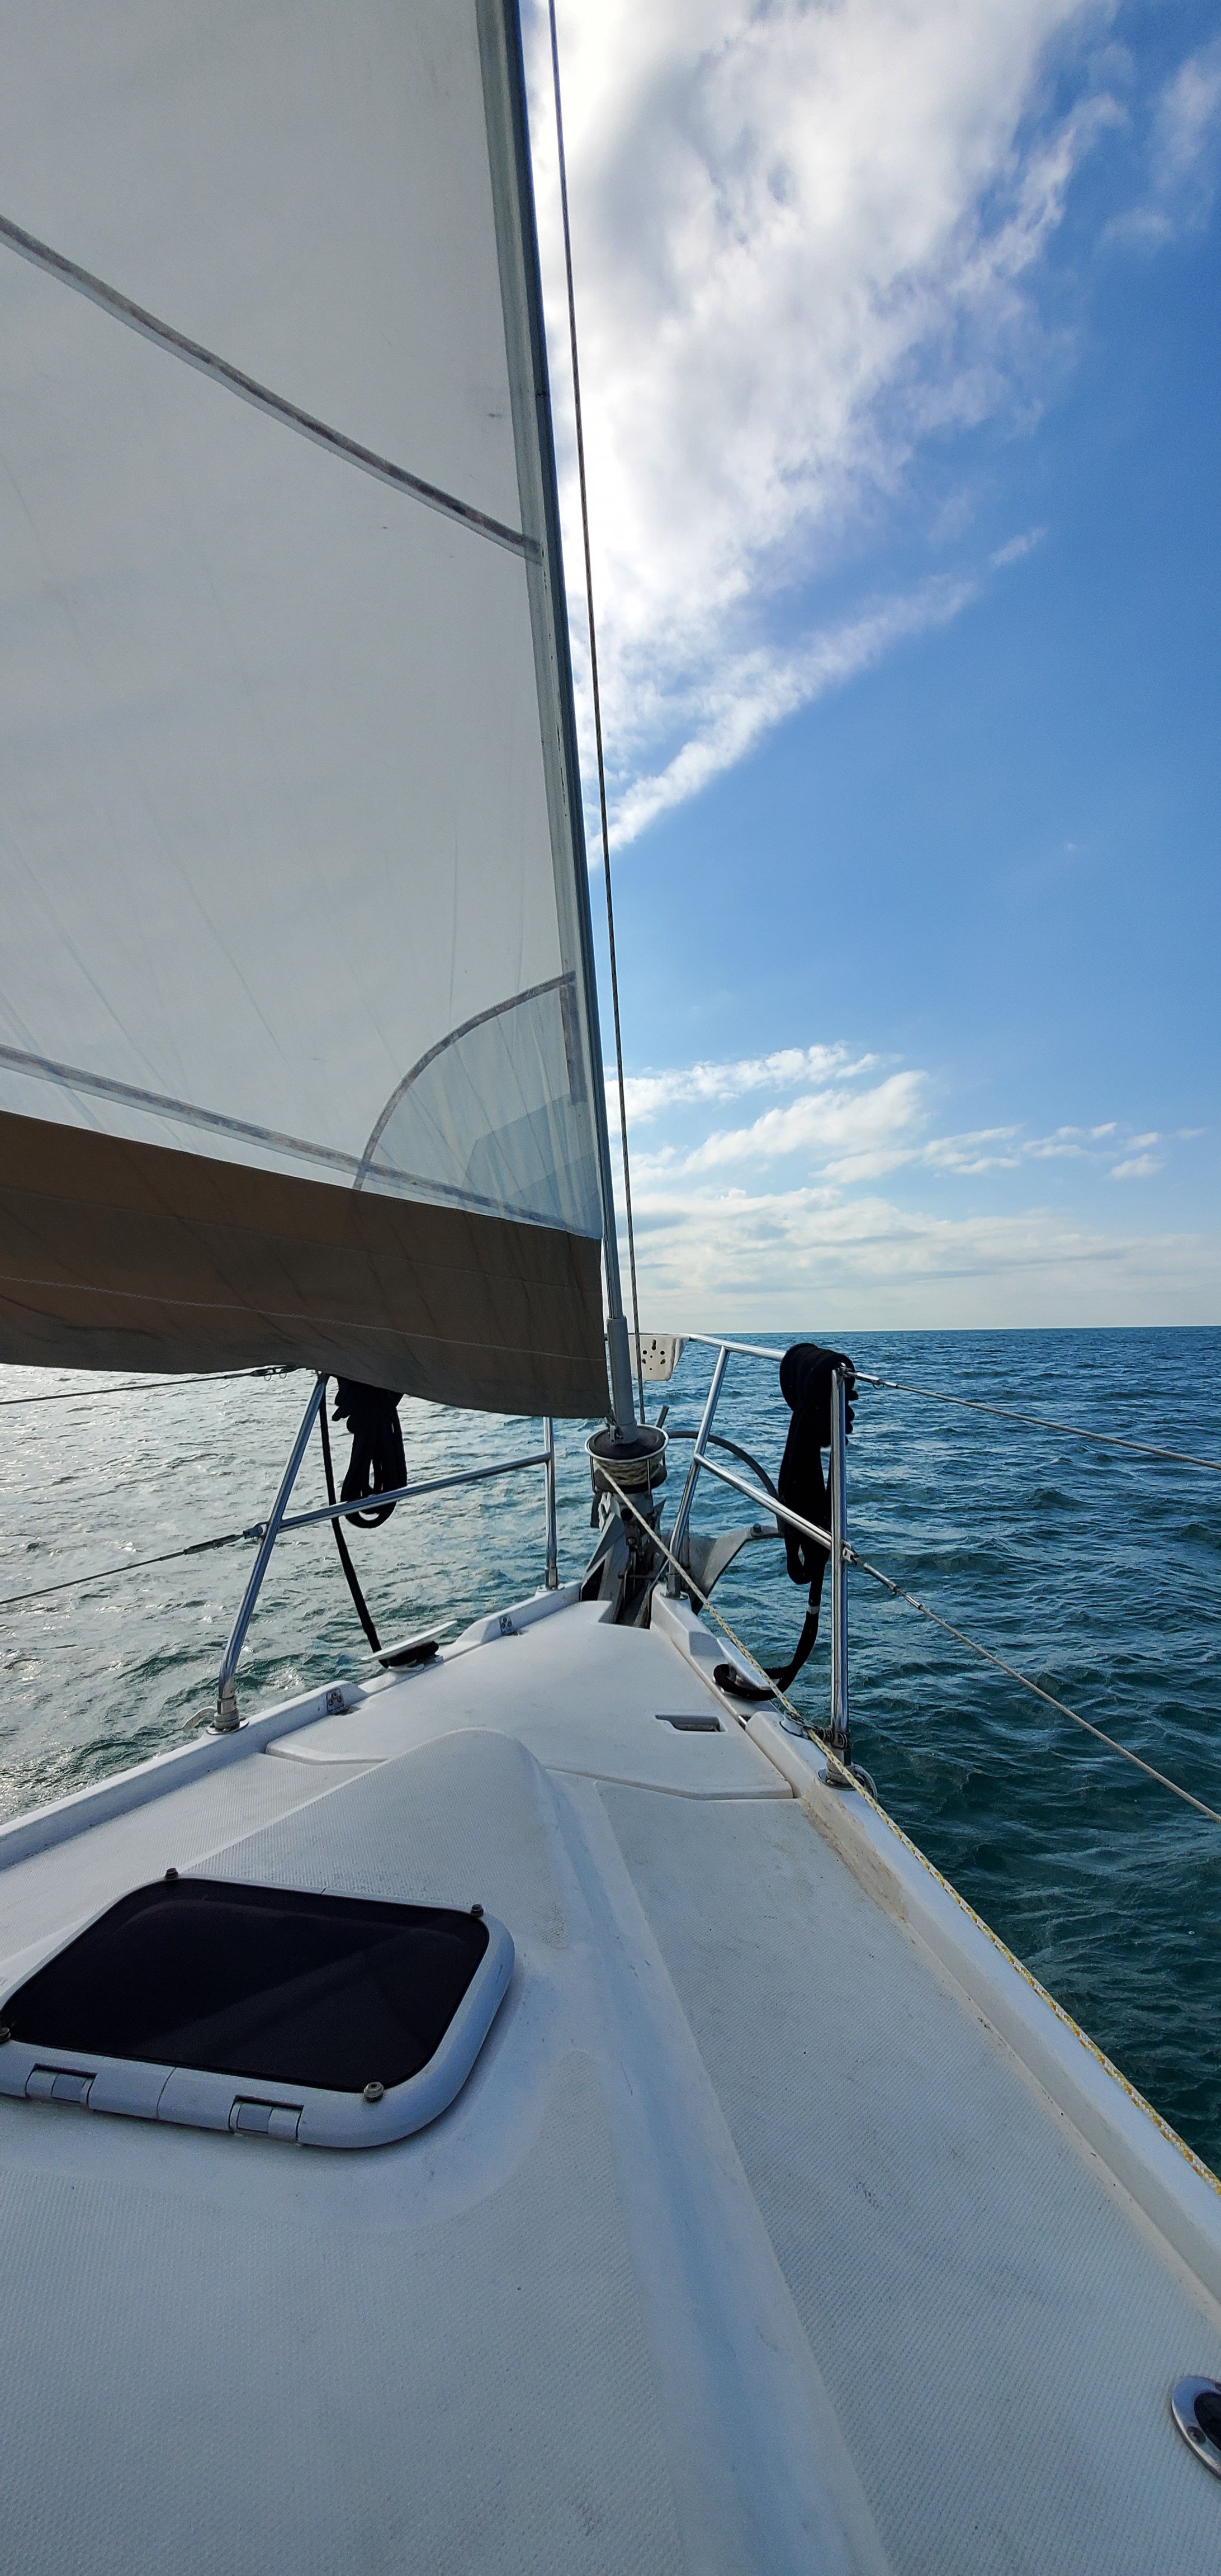 Chasing the horizon, sailing towards new adventures.